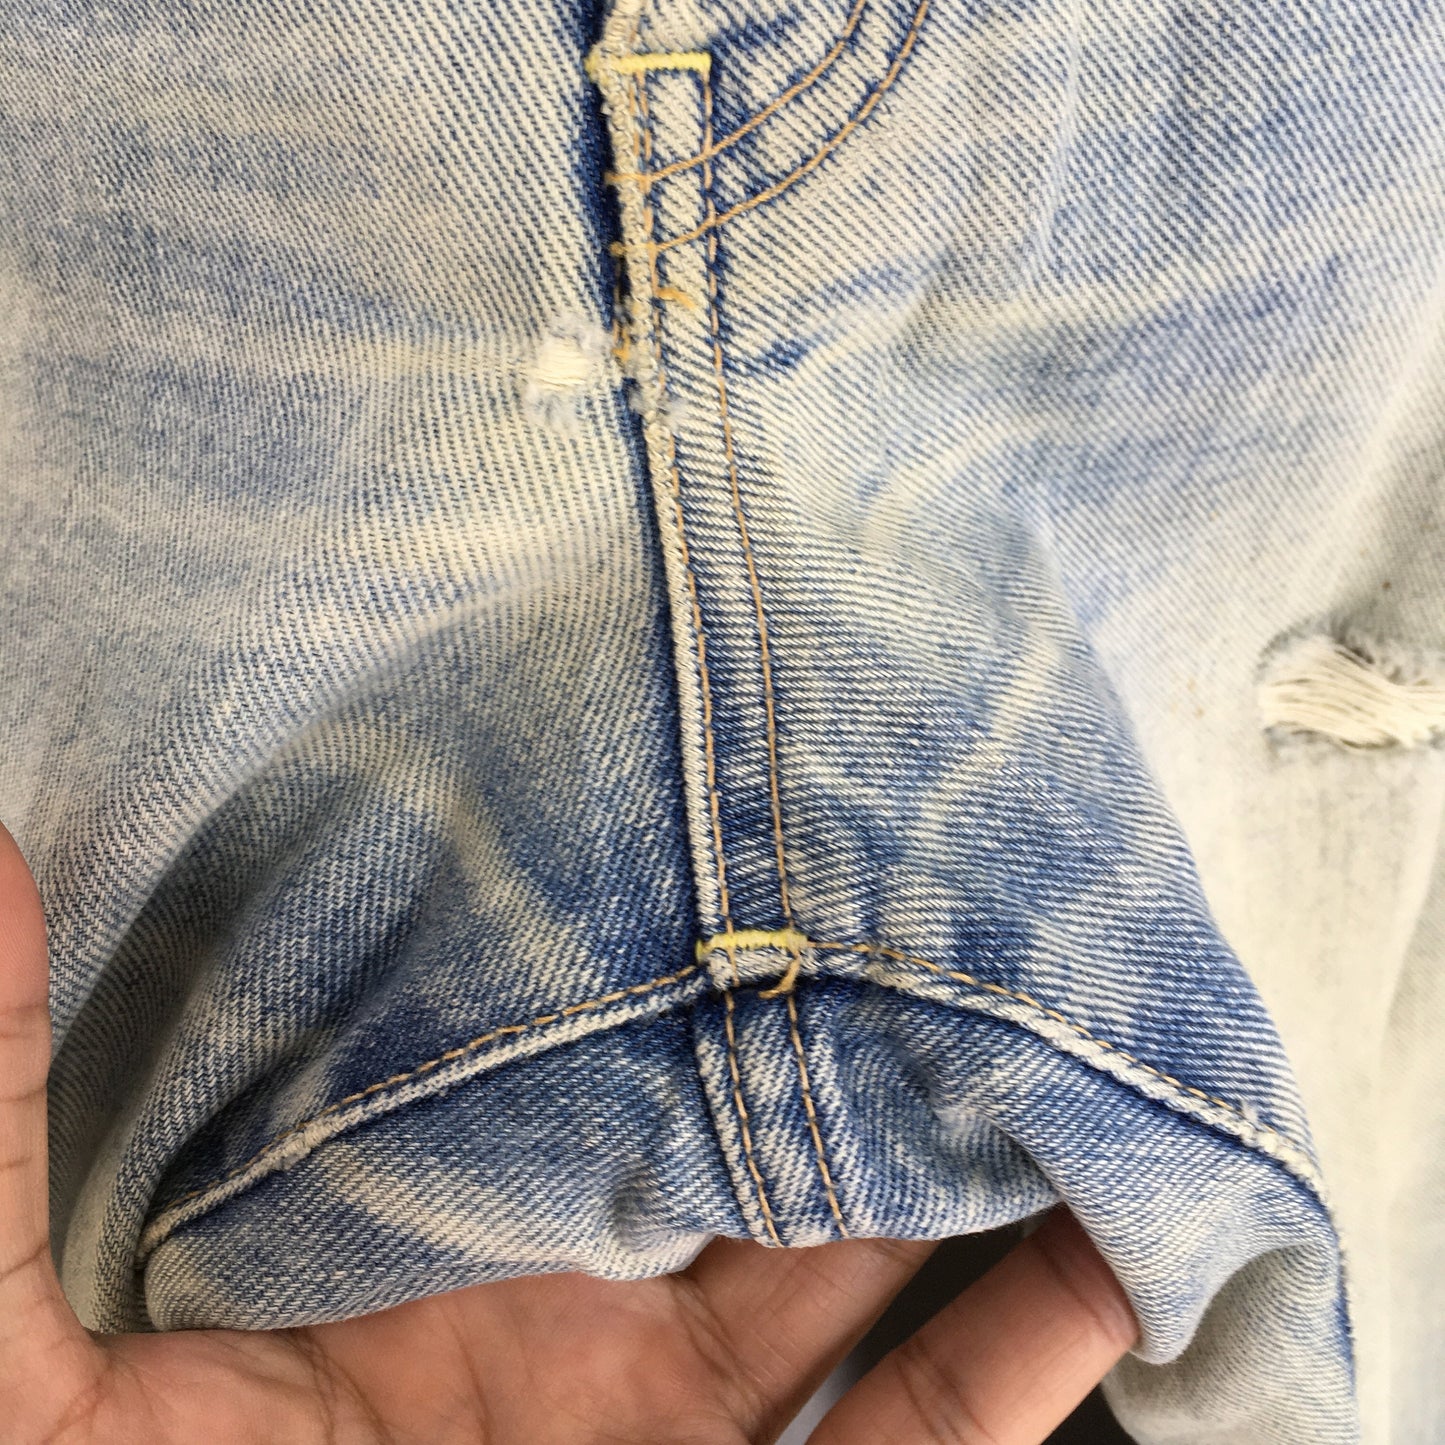 Edwin Classic Faded Blue Stonewash Jeans Size 31x28